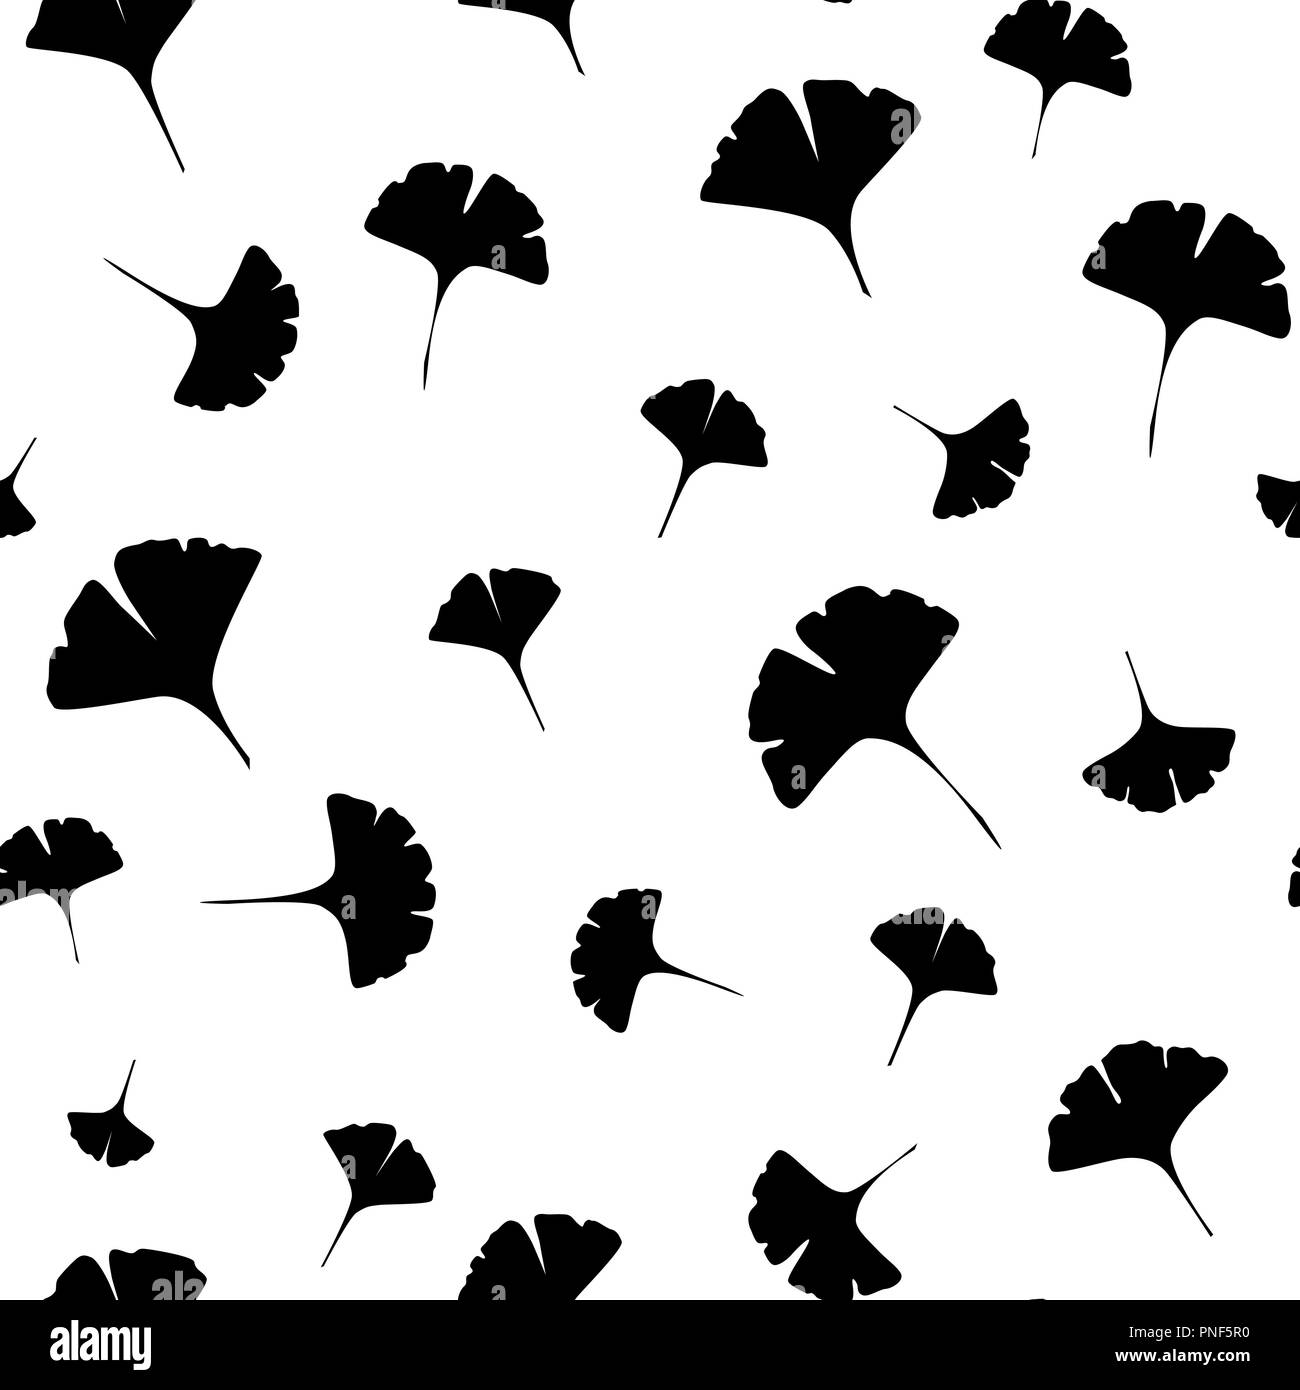 Leaves of ginkgo bilboa. Black leaf silhouettes. Seamless vector illustration. Stock Vector